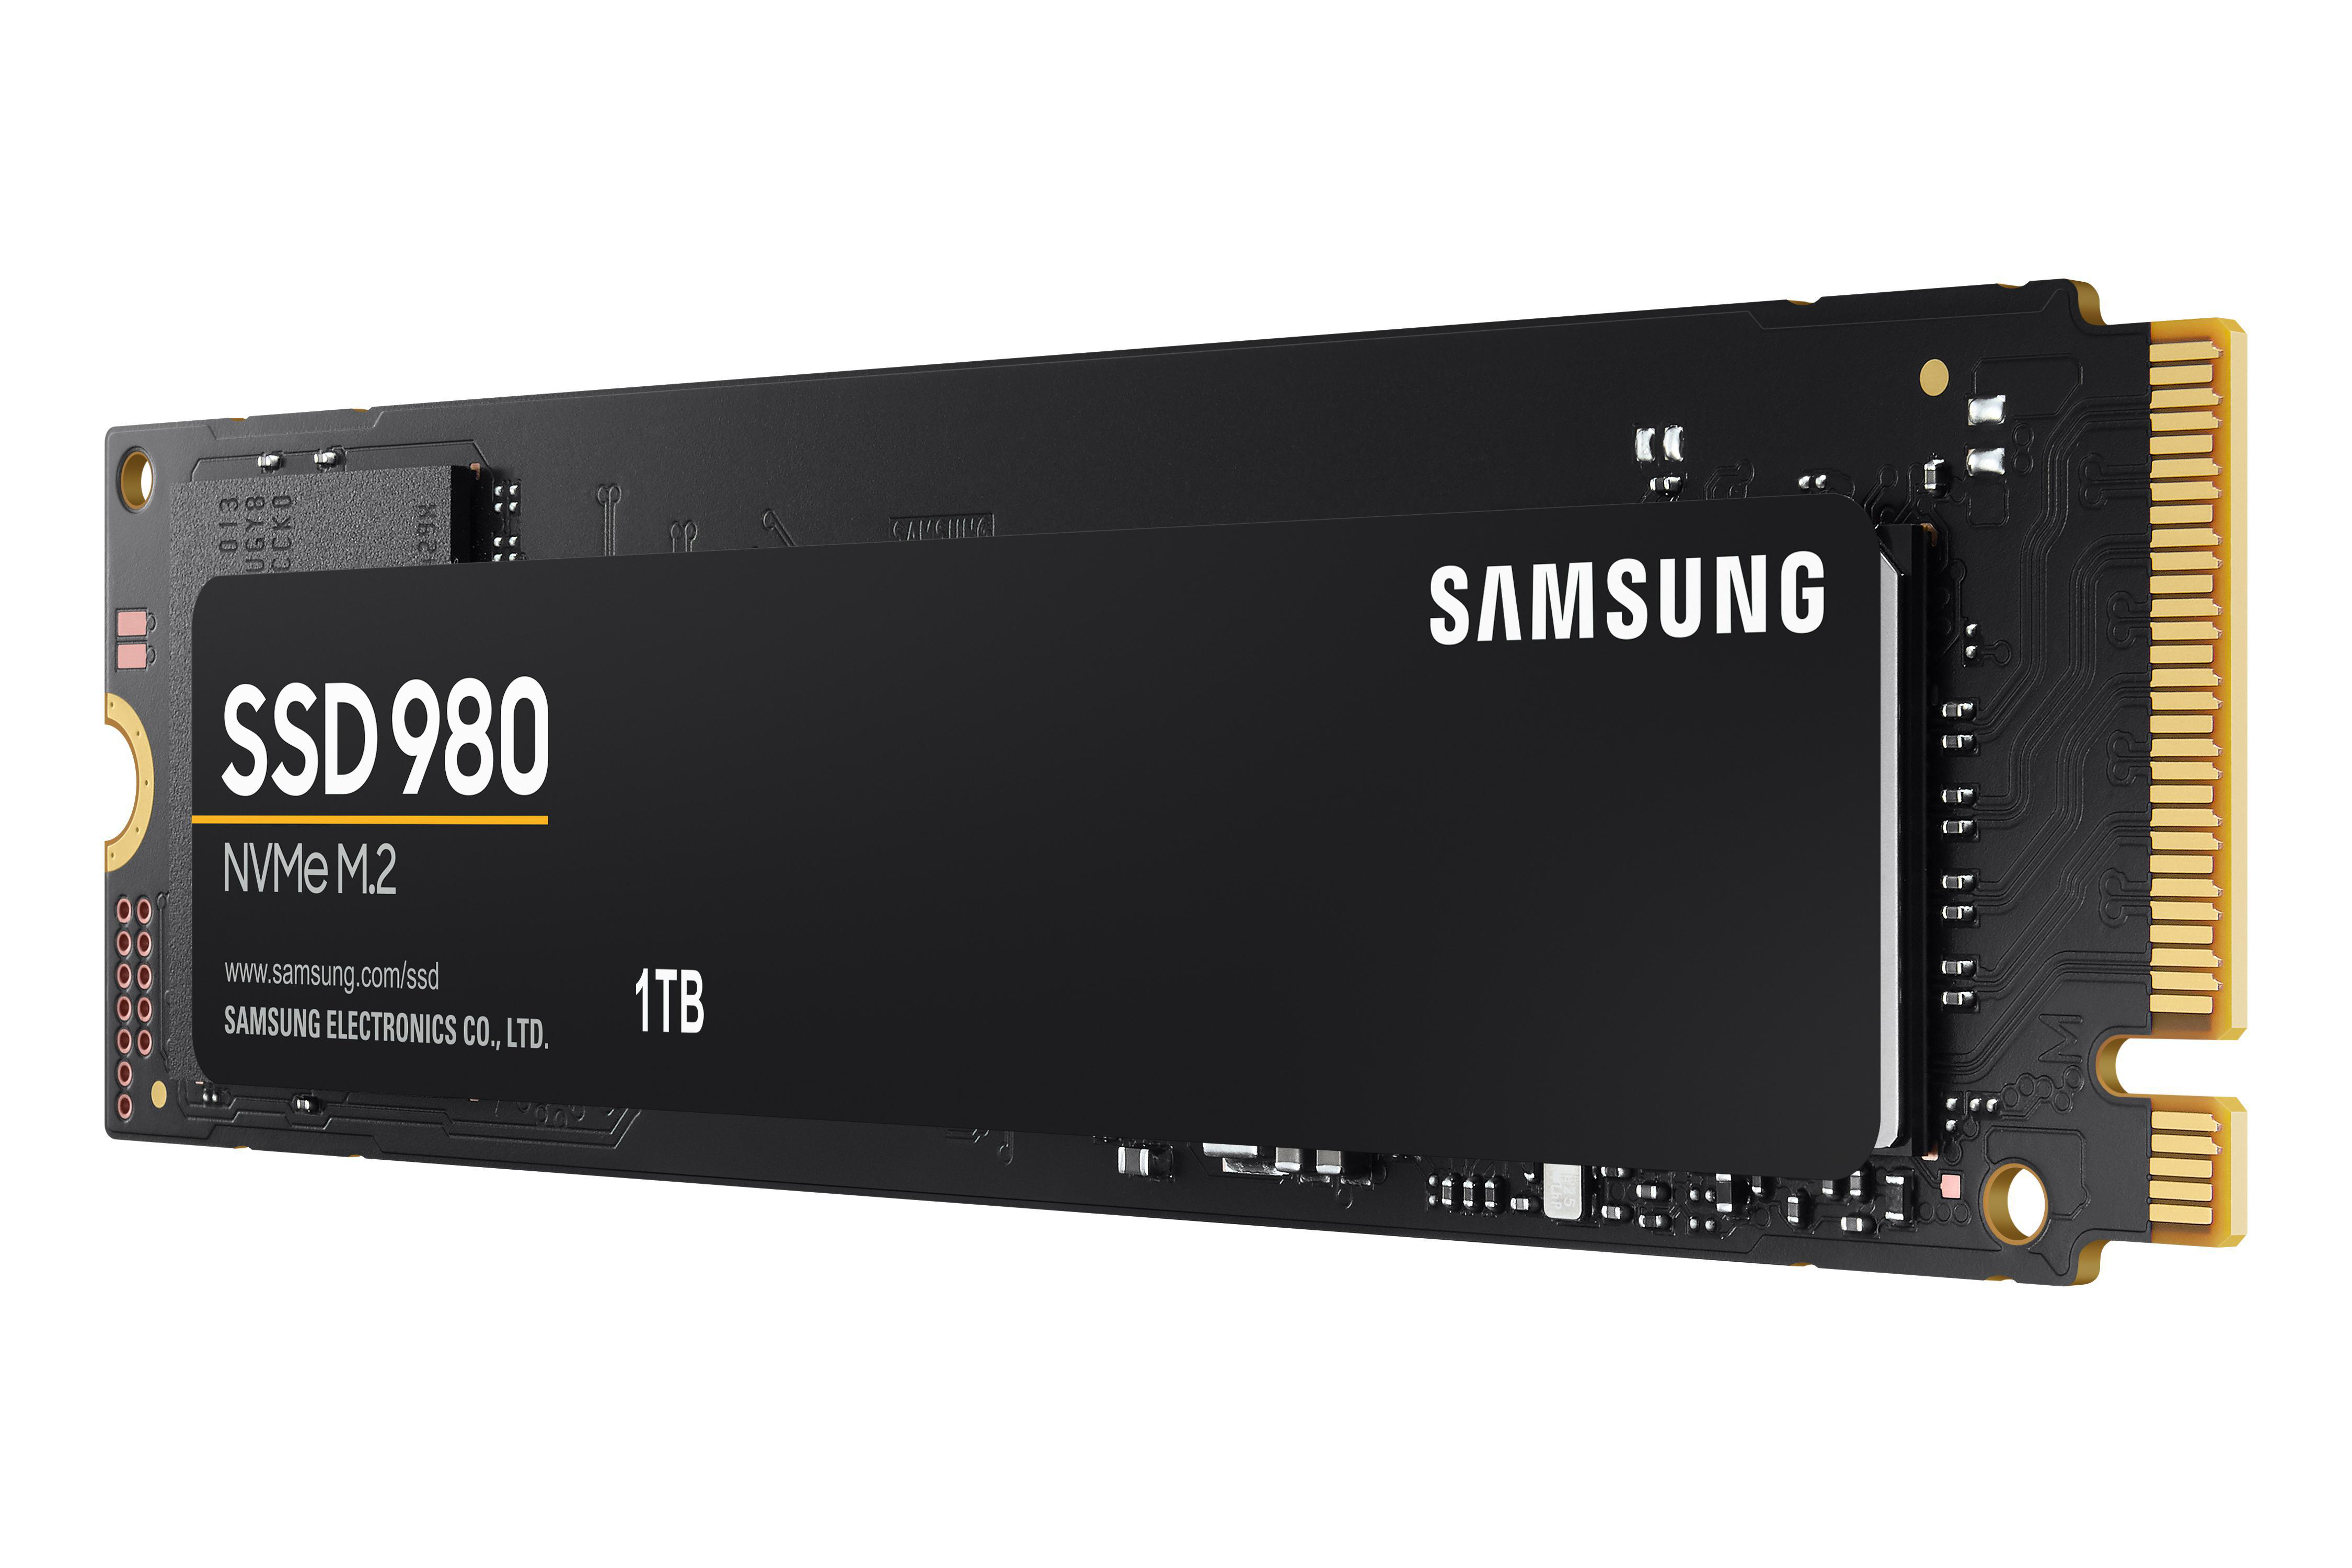 TB Festplatte M.2 NVMe, via SAMSUNG Retail, SSD 980 1 intern